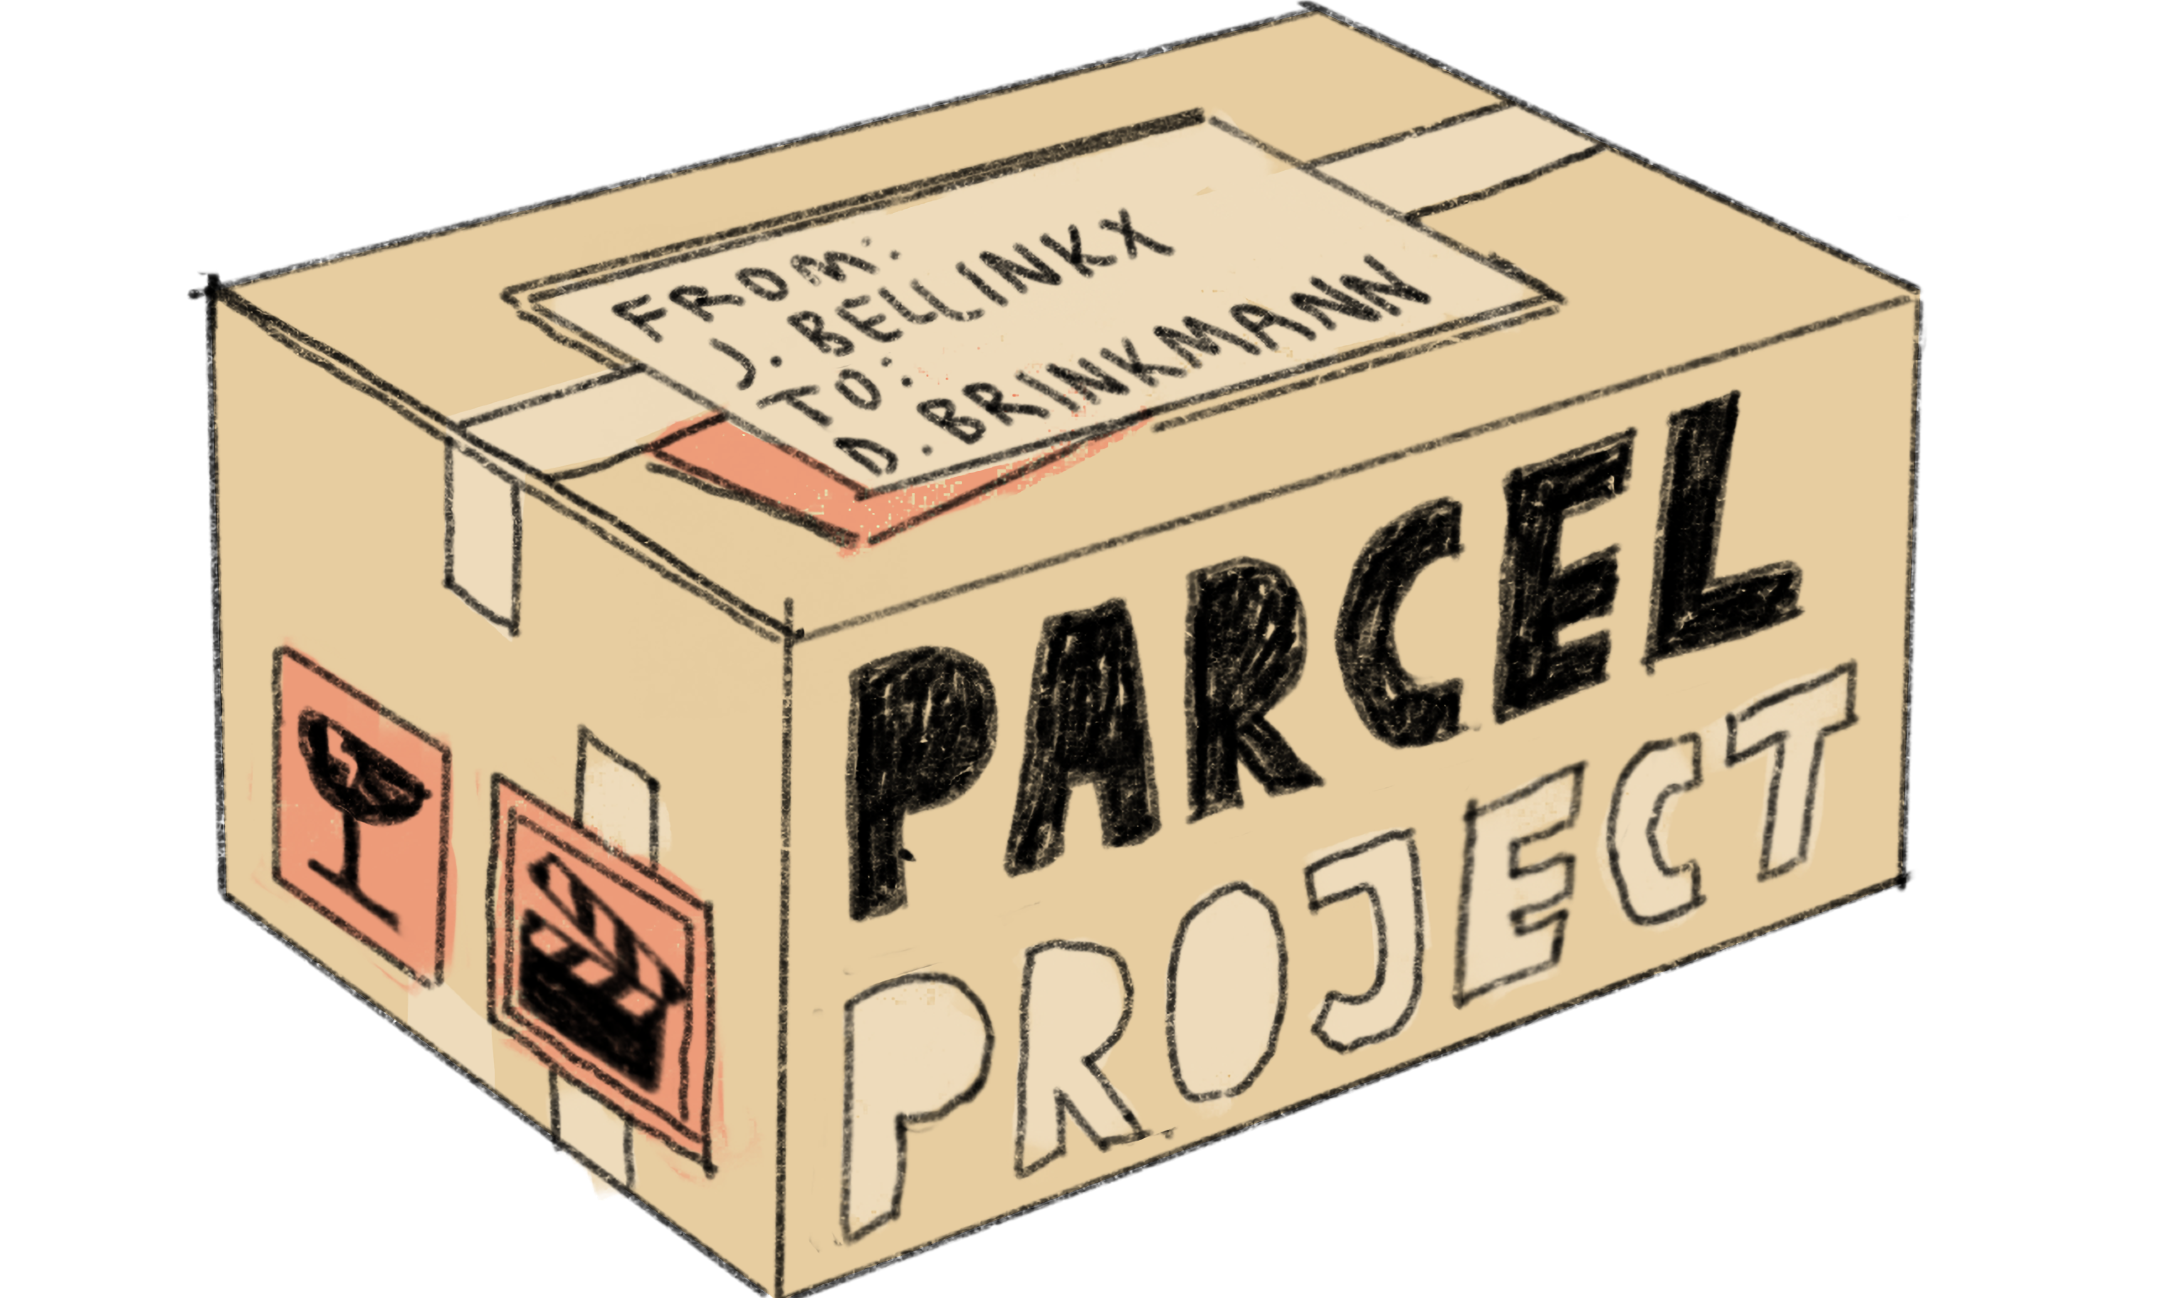 The Parcel Project